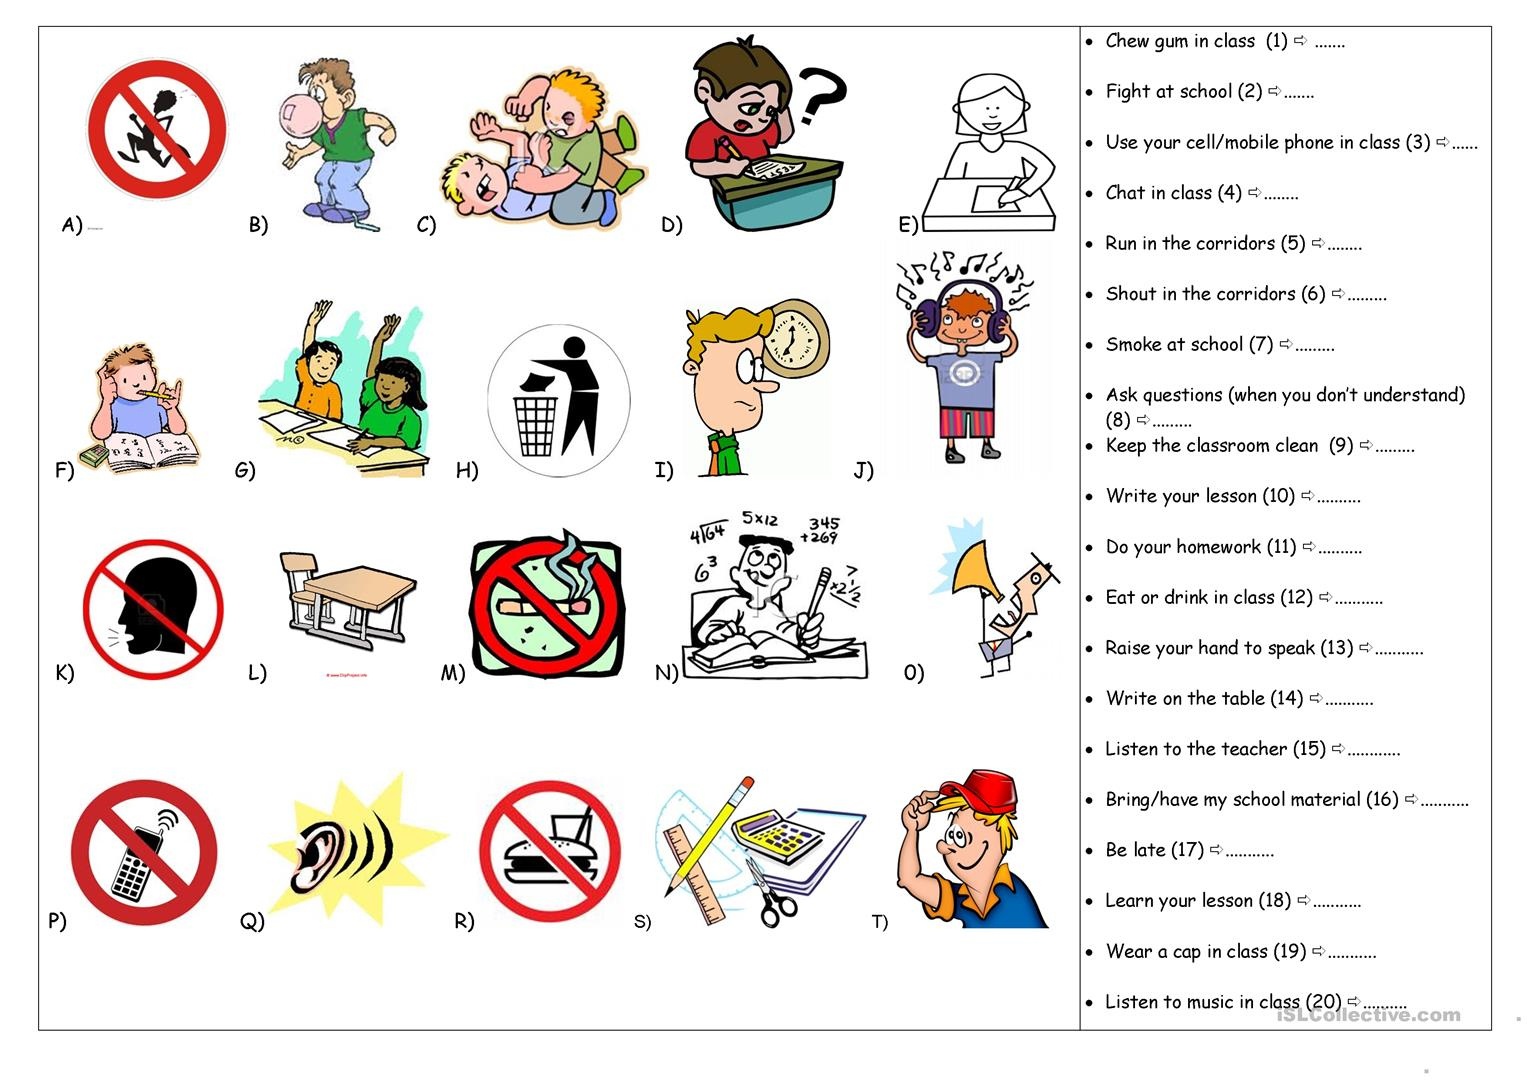 Classroom Rules Worksheet - Free Esl Printable Worksheets Made - Free Printable Classroom Rules Worksheets